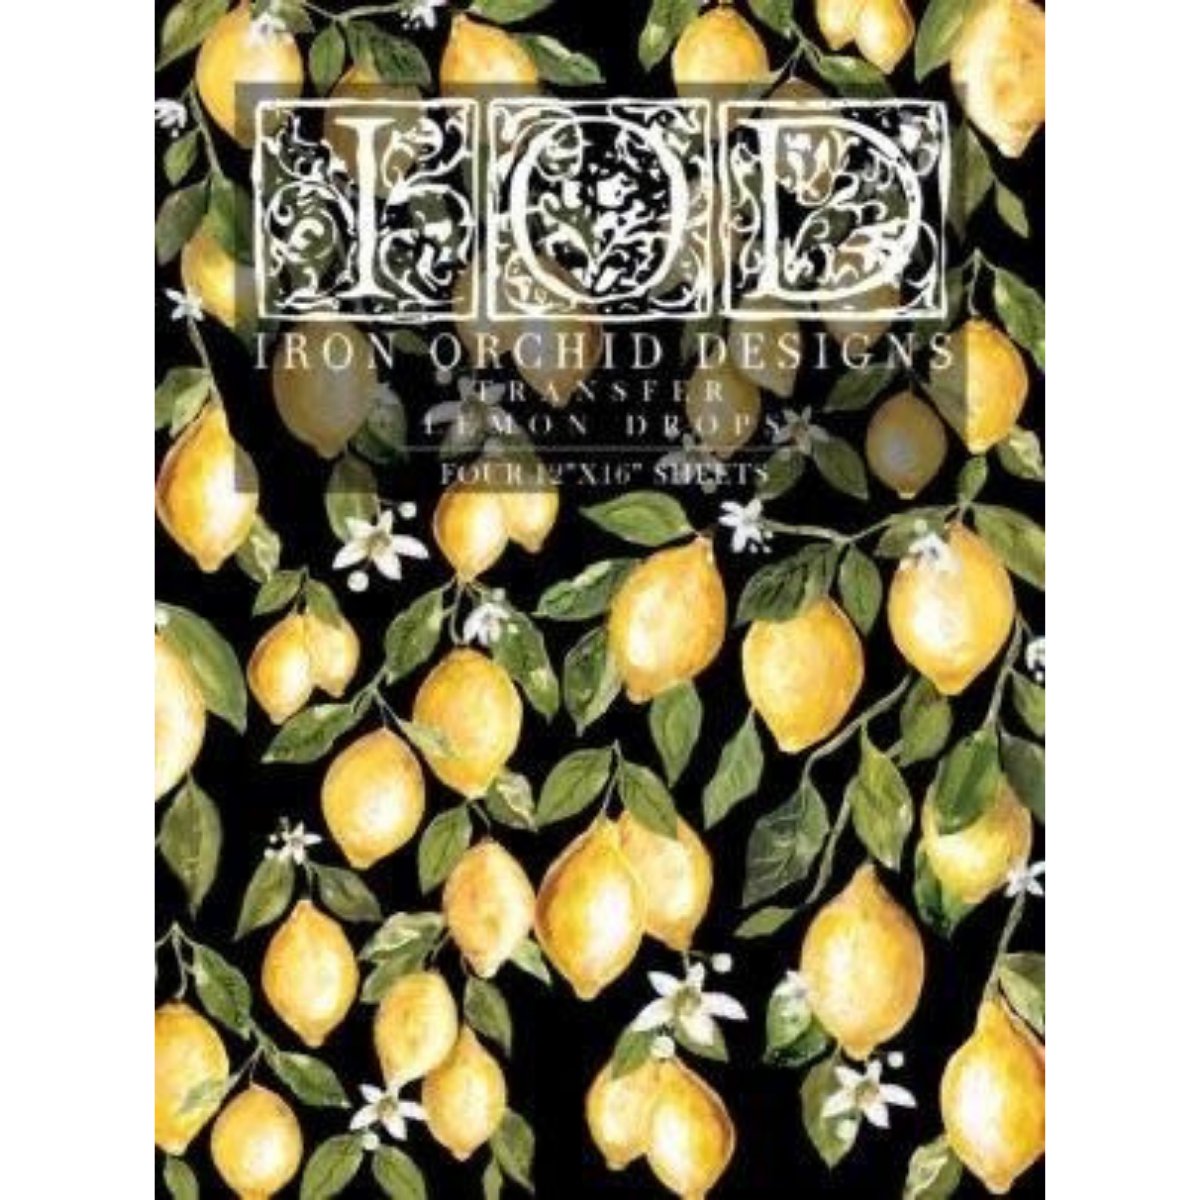 Iron Orchid Designs - Lemon Drops Decor Transfer Pad - Rustic River Home